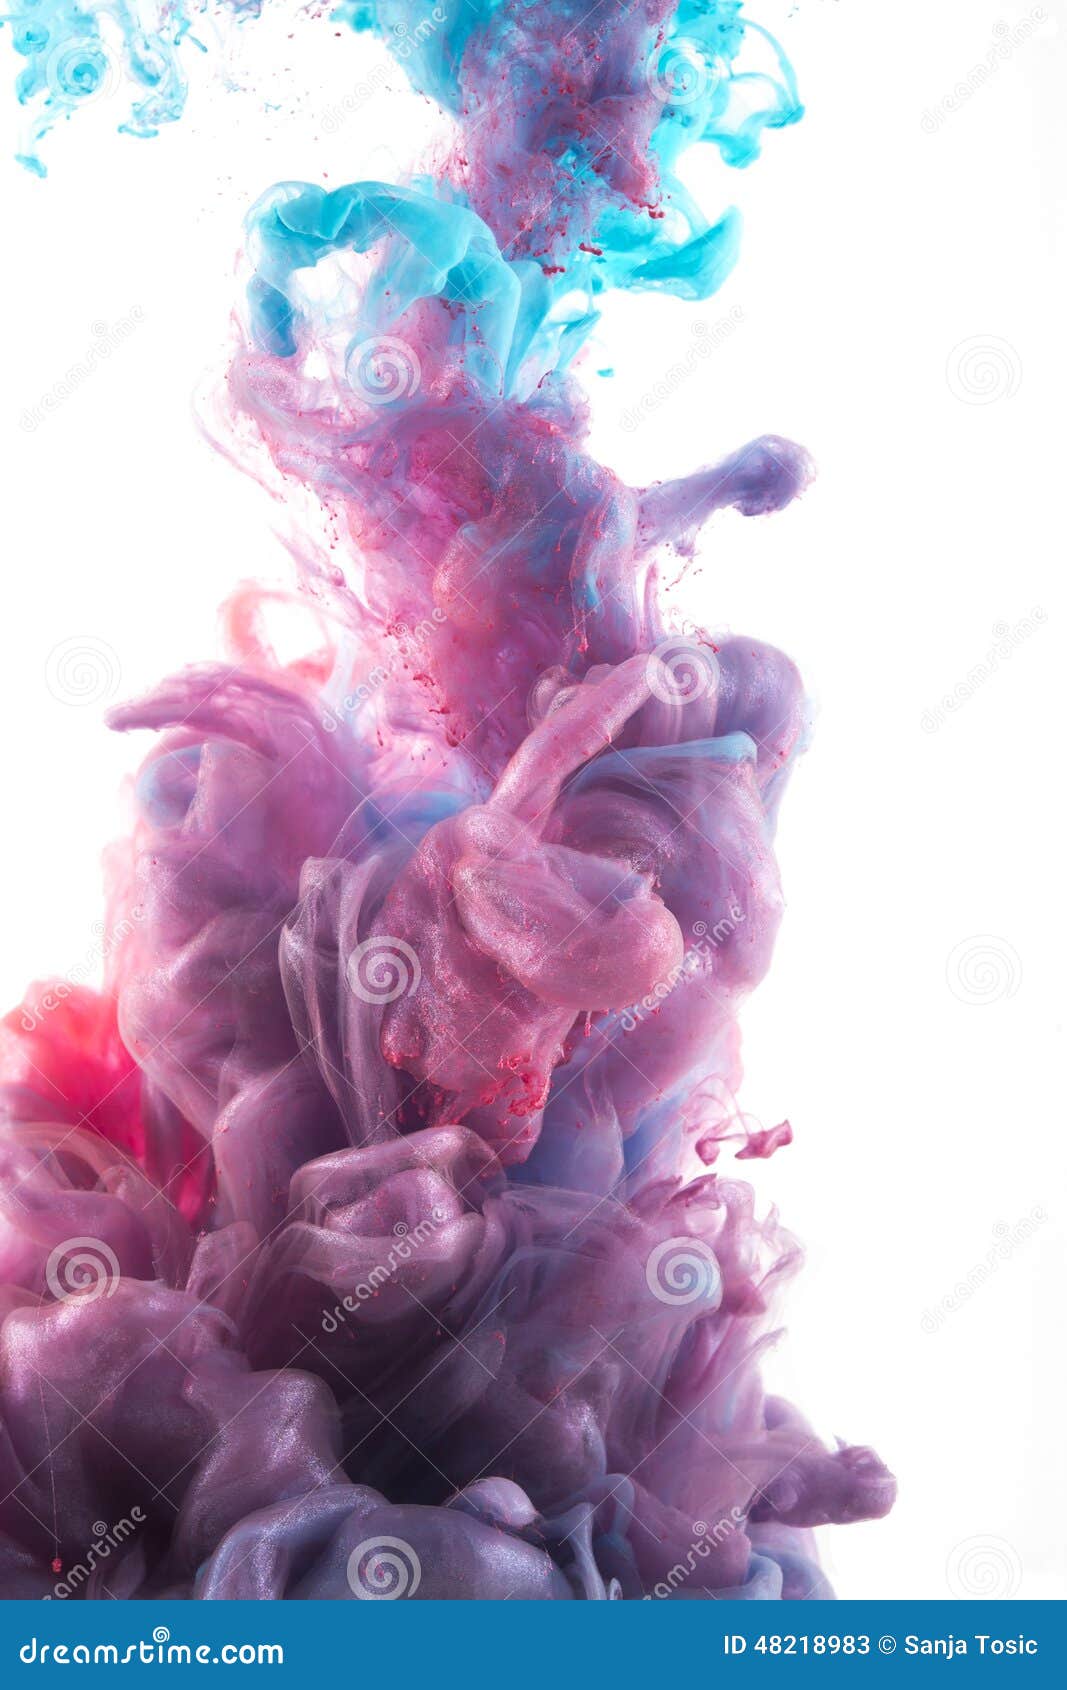 color ink drop in water. redish violet, deep blue, glitter, cyan